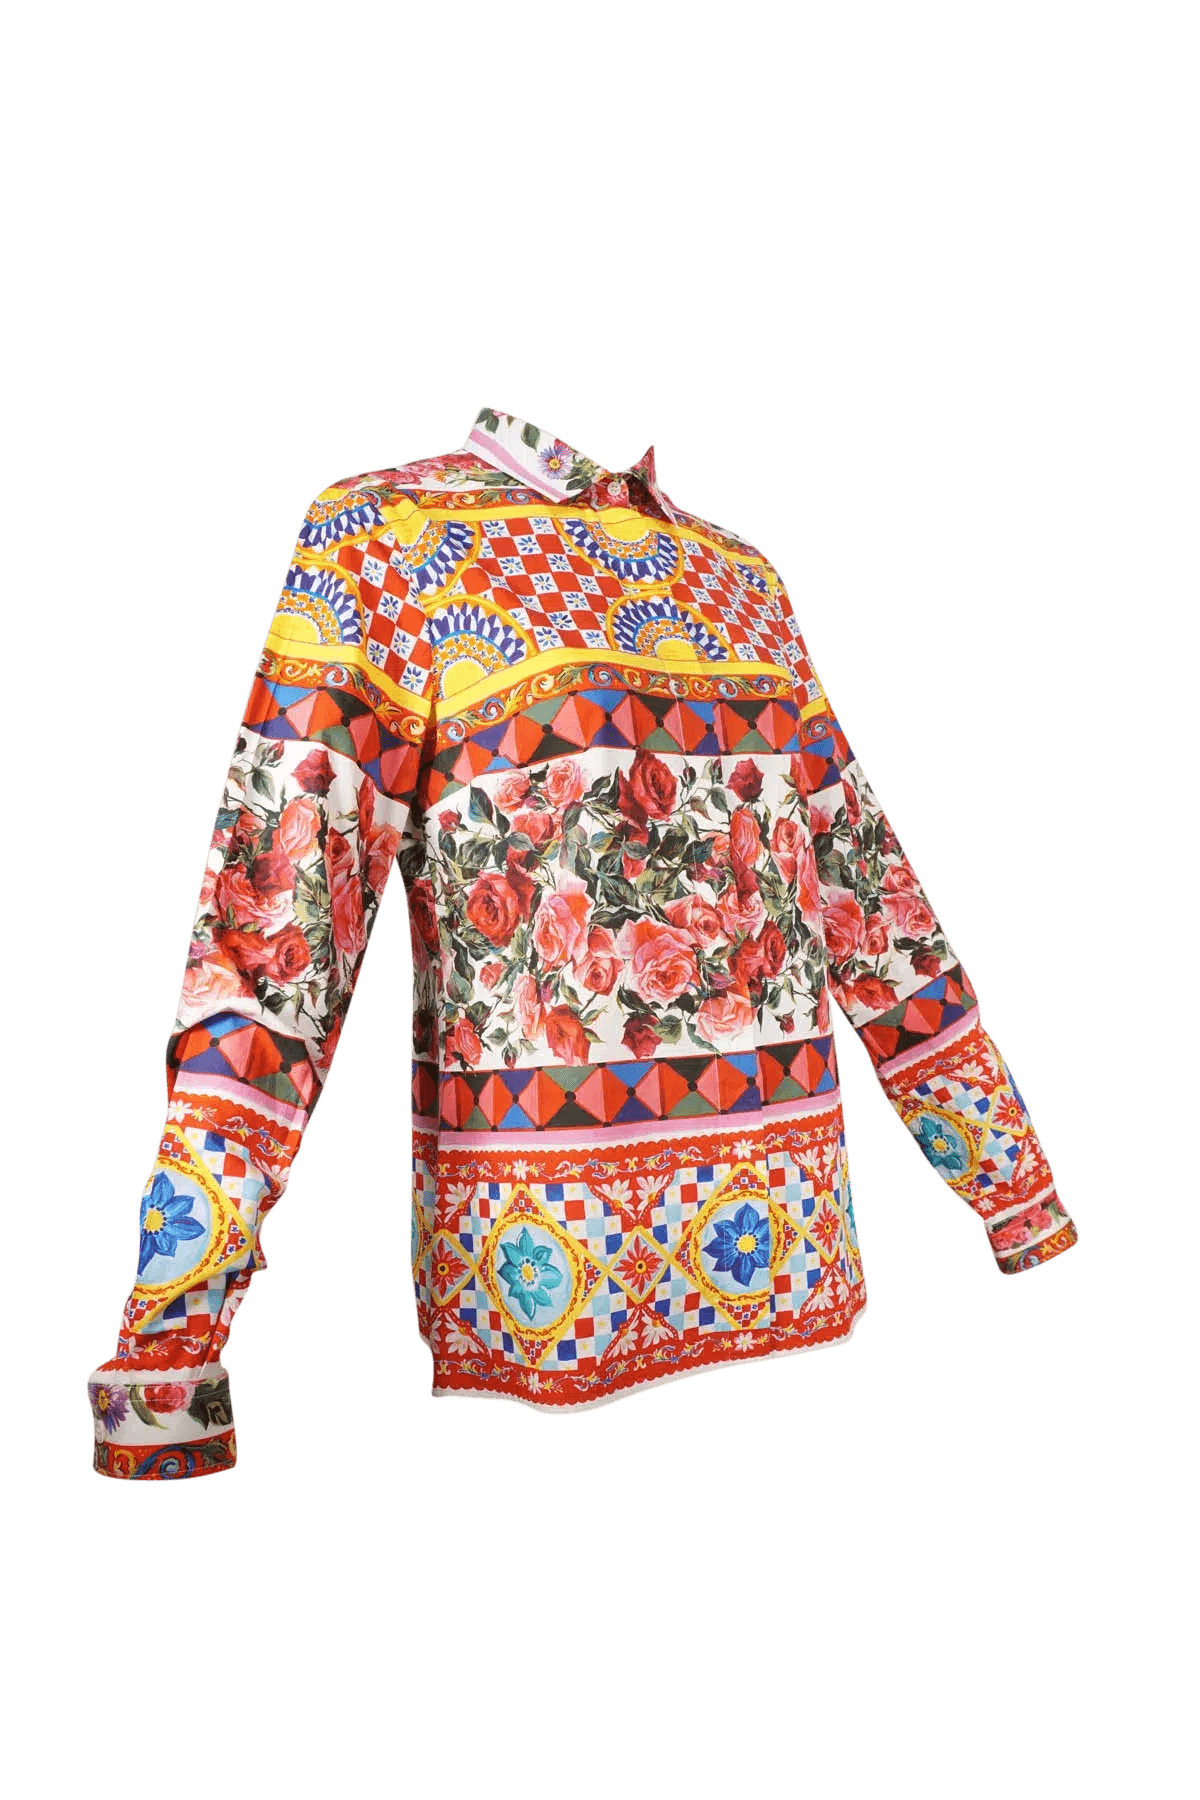 Dolce & Gabbana Multi-Color Italy Mixed Print Blouse Shirt